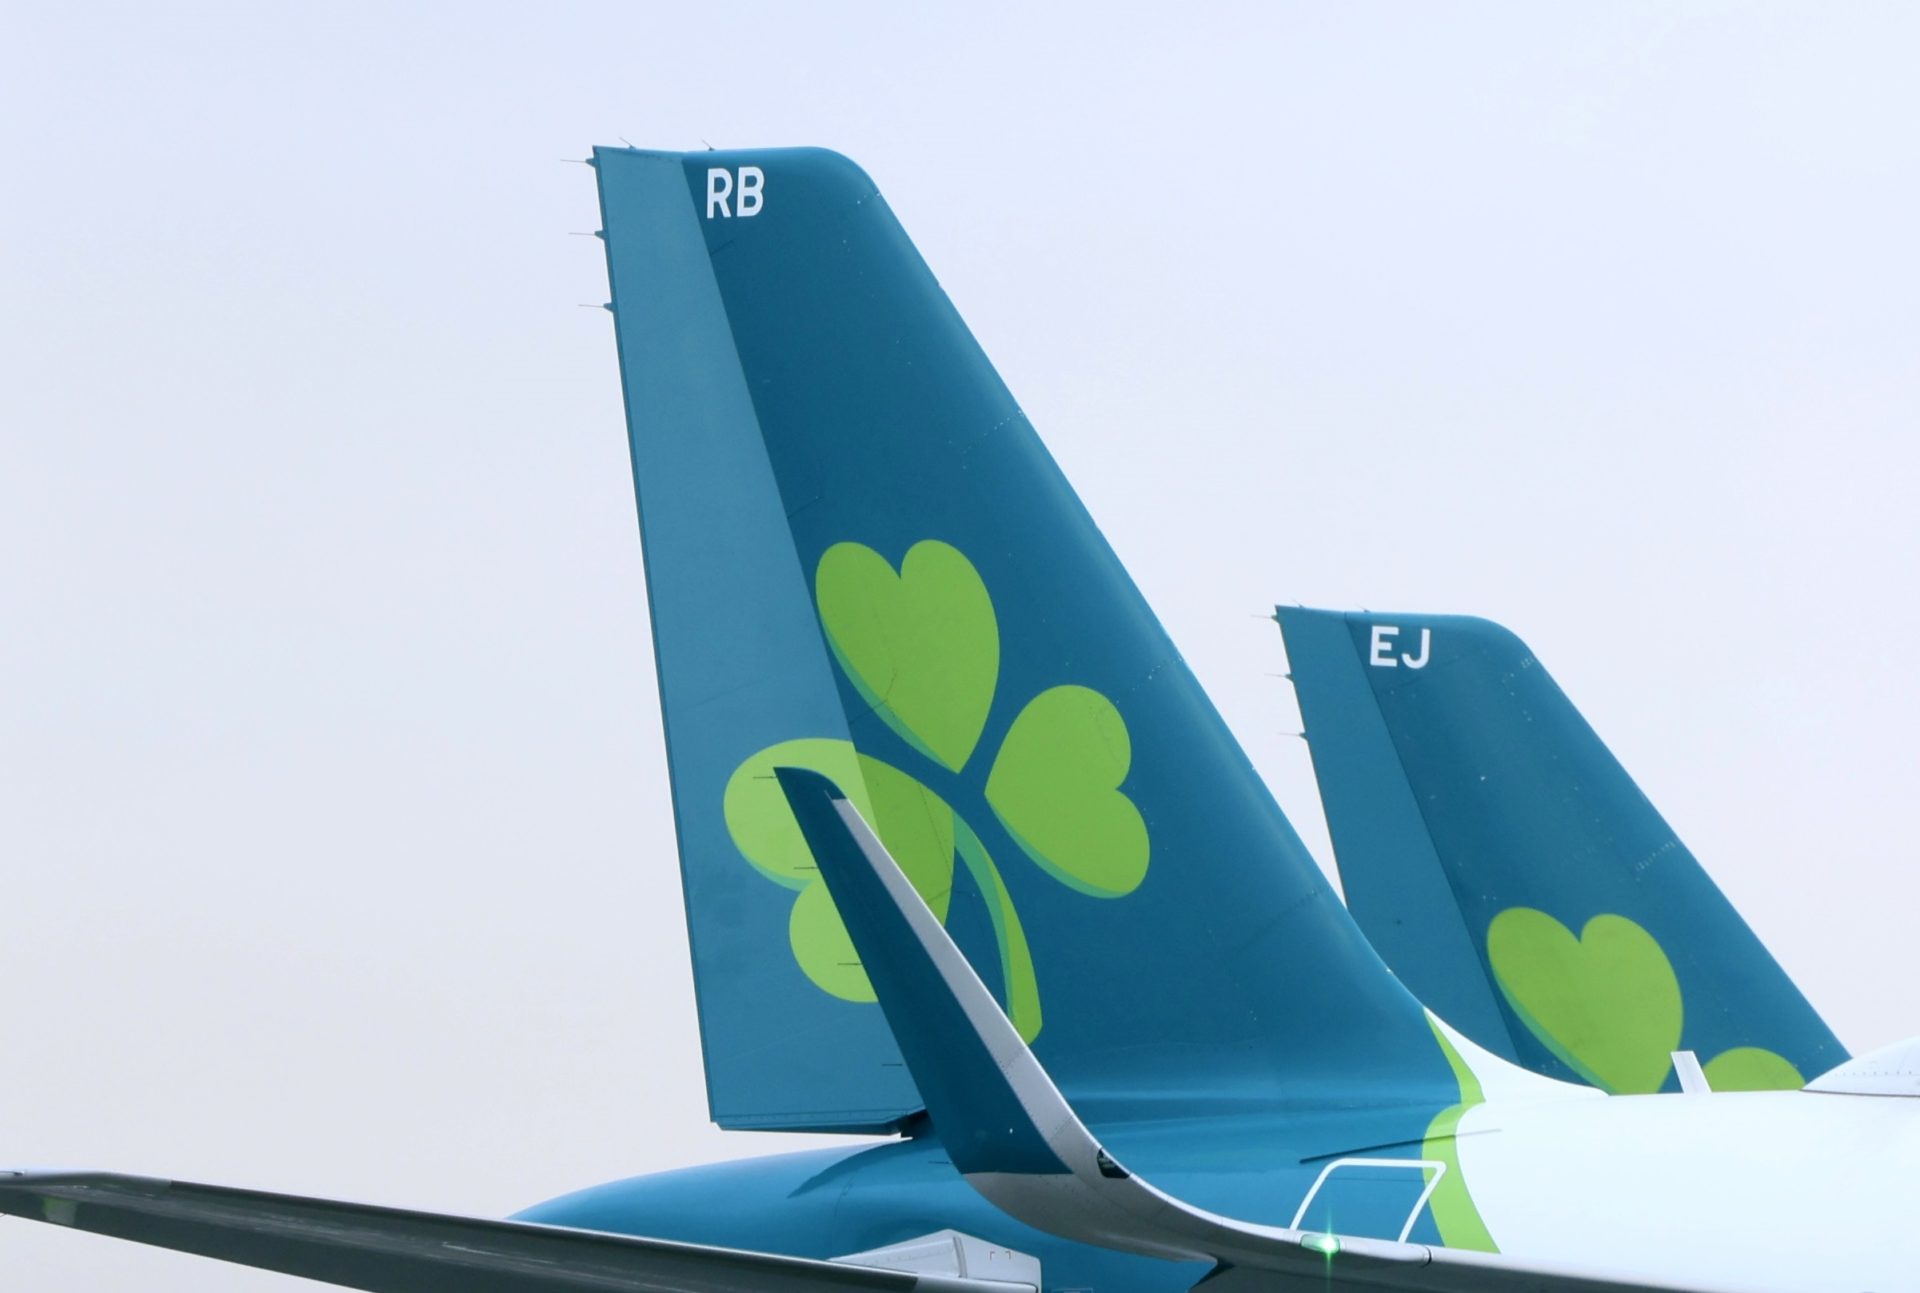 Aer Lingus planes at Dublin Airport, 3-1-24.